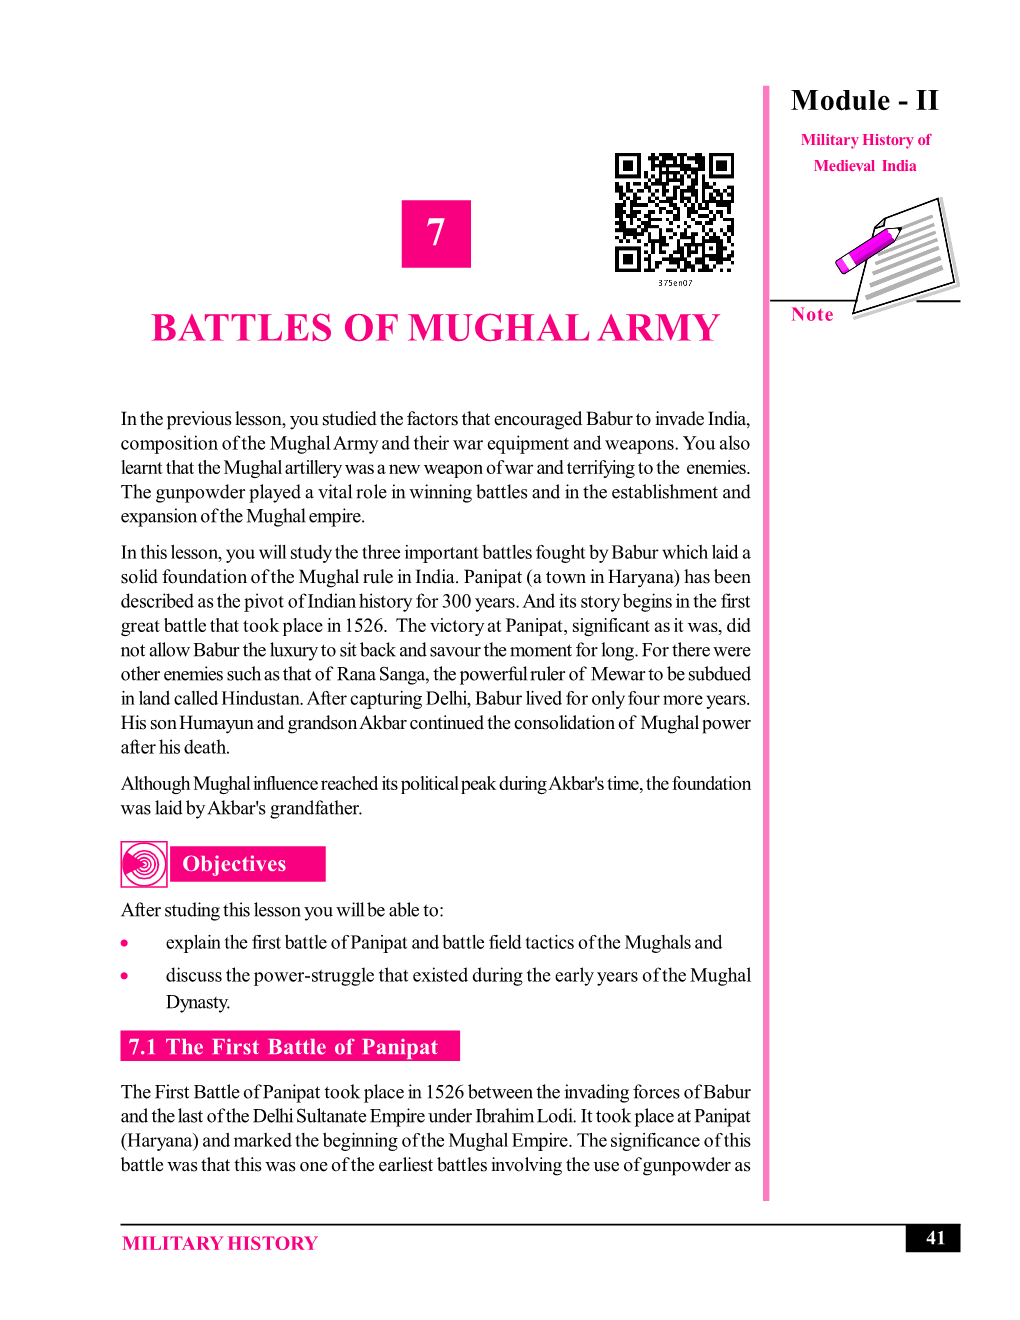 7 Battles of Mughal Army